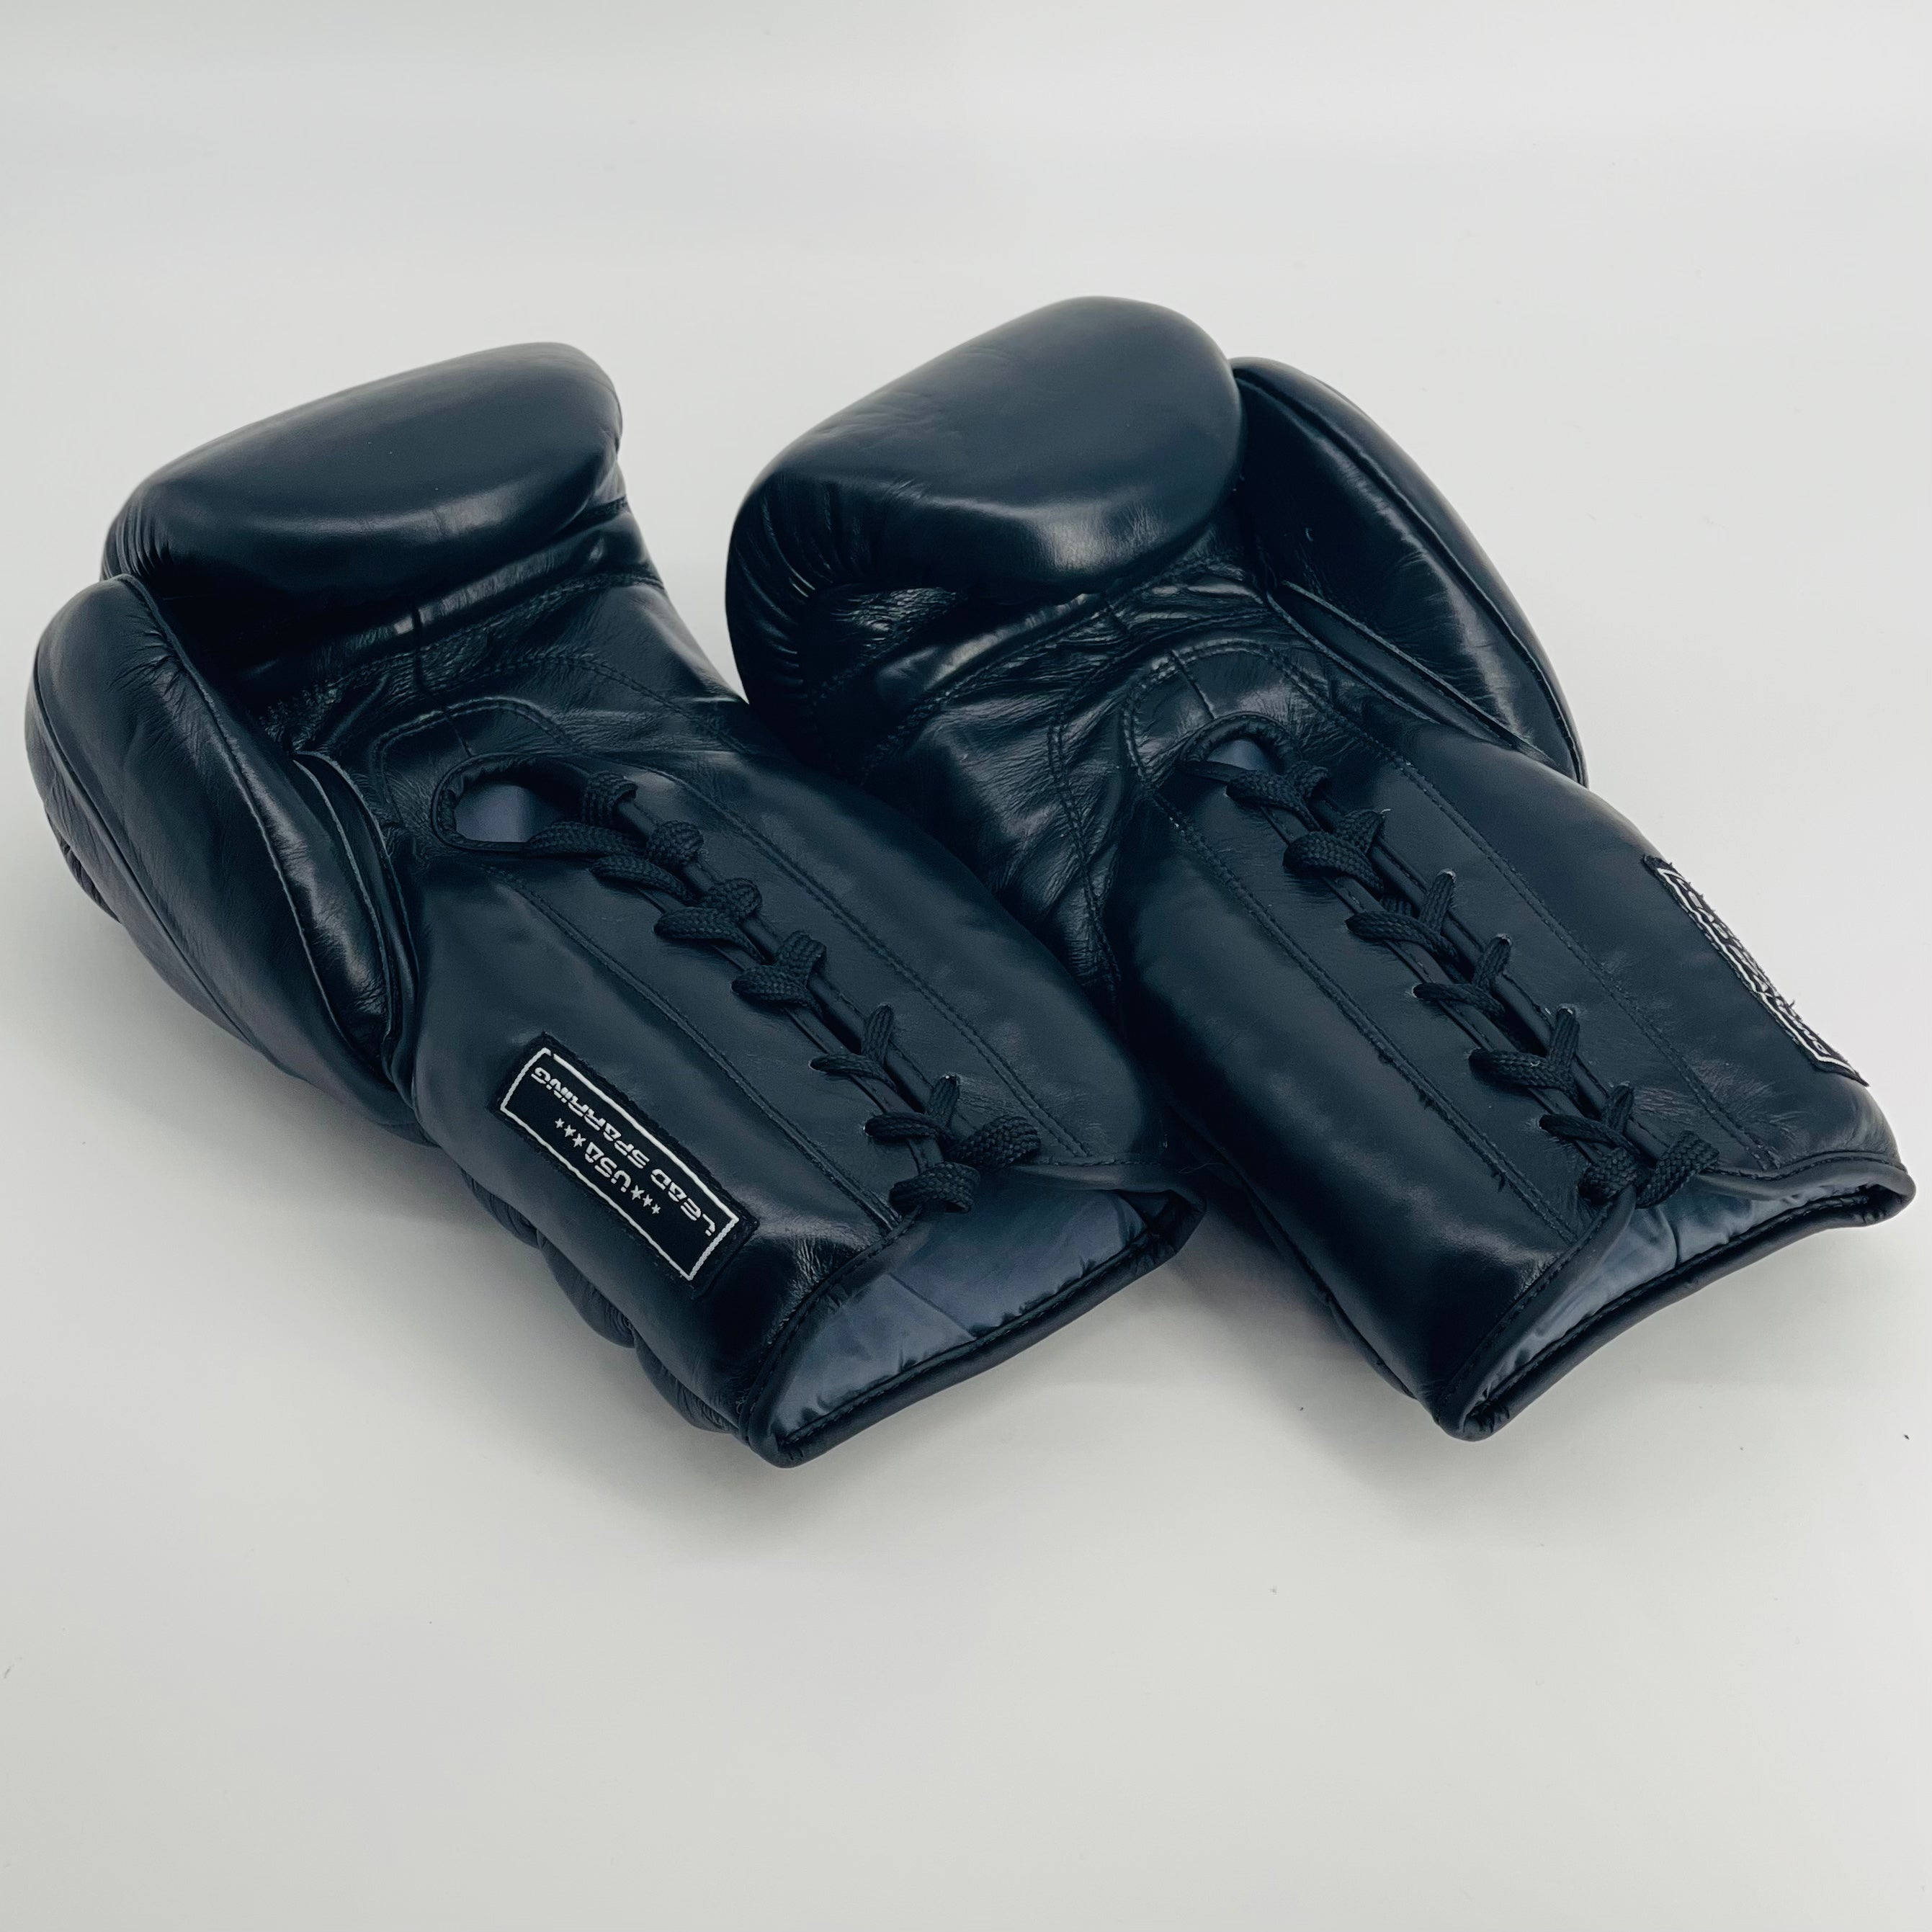 LEAD Sparring Gloves (Black / Silver logo )